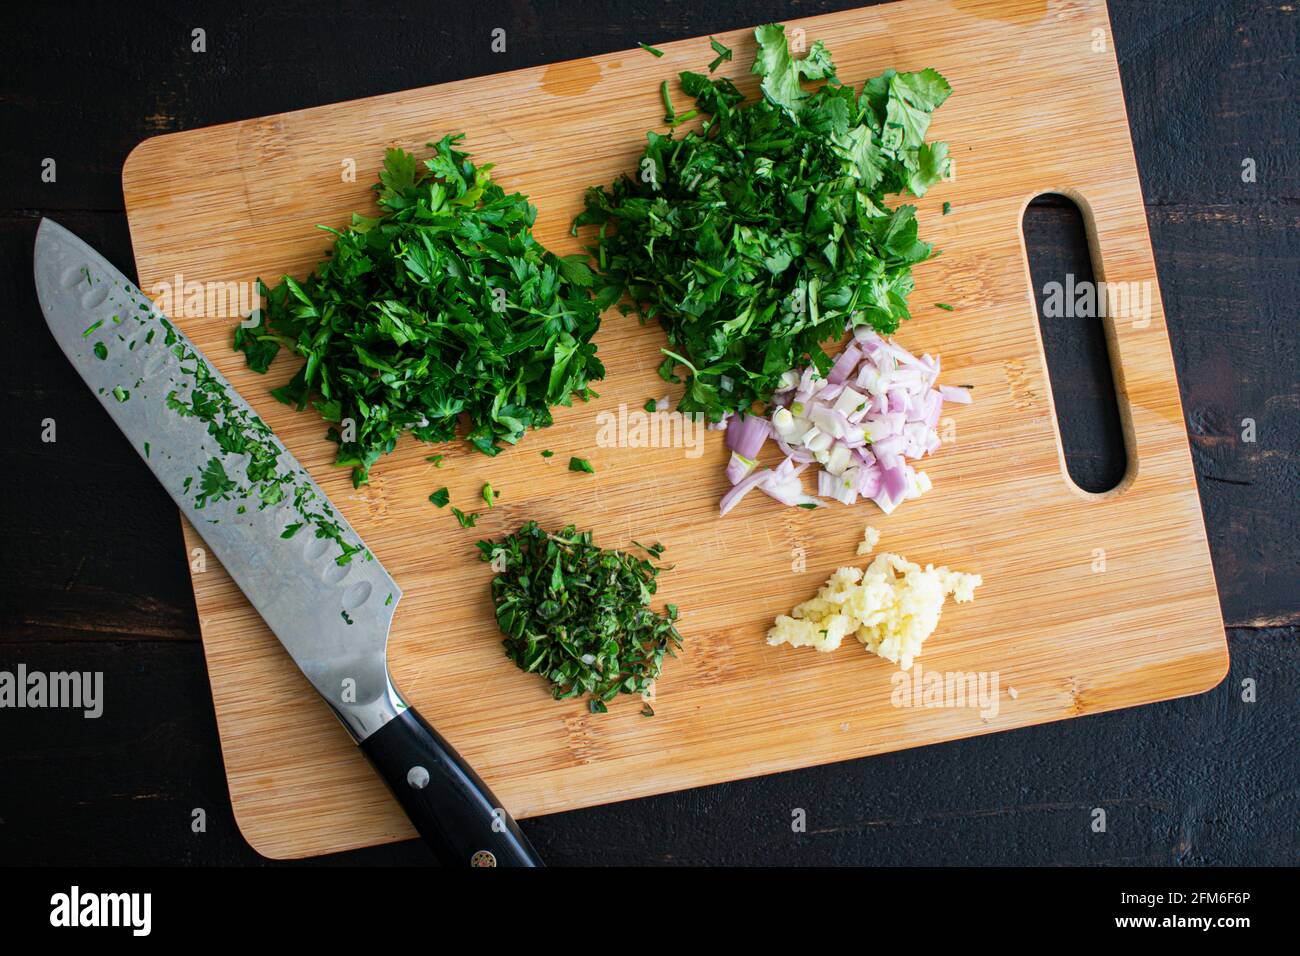 https://c8.alamy.com/comp/2FM6F6P/chopped-herbs-on-a-bamboo-cutting-board-chopped-parsley-cilantro-oregano-shallots-and-garlic-on-a-bamboo-cutting-board-2FM6F6P.jpg